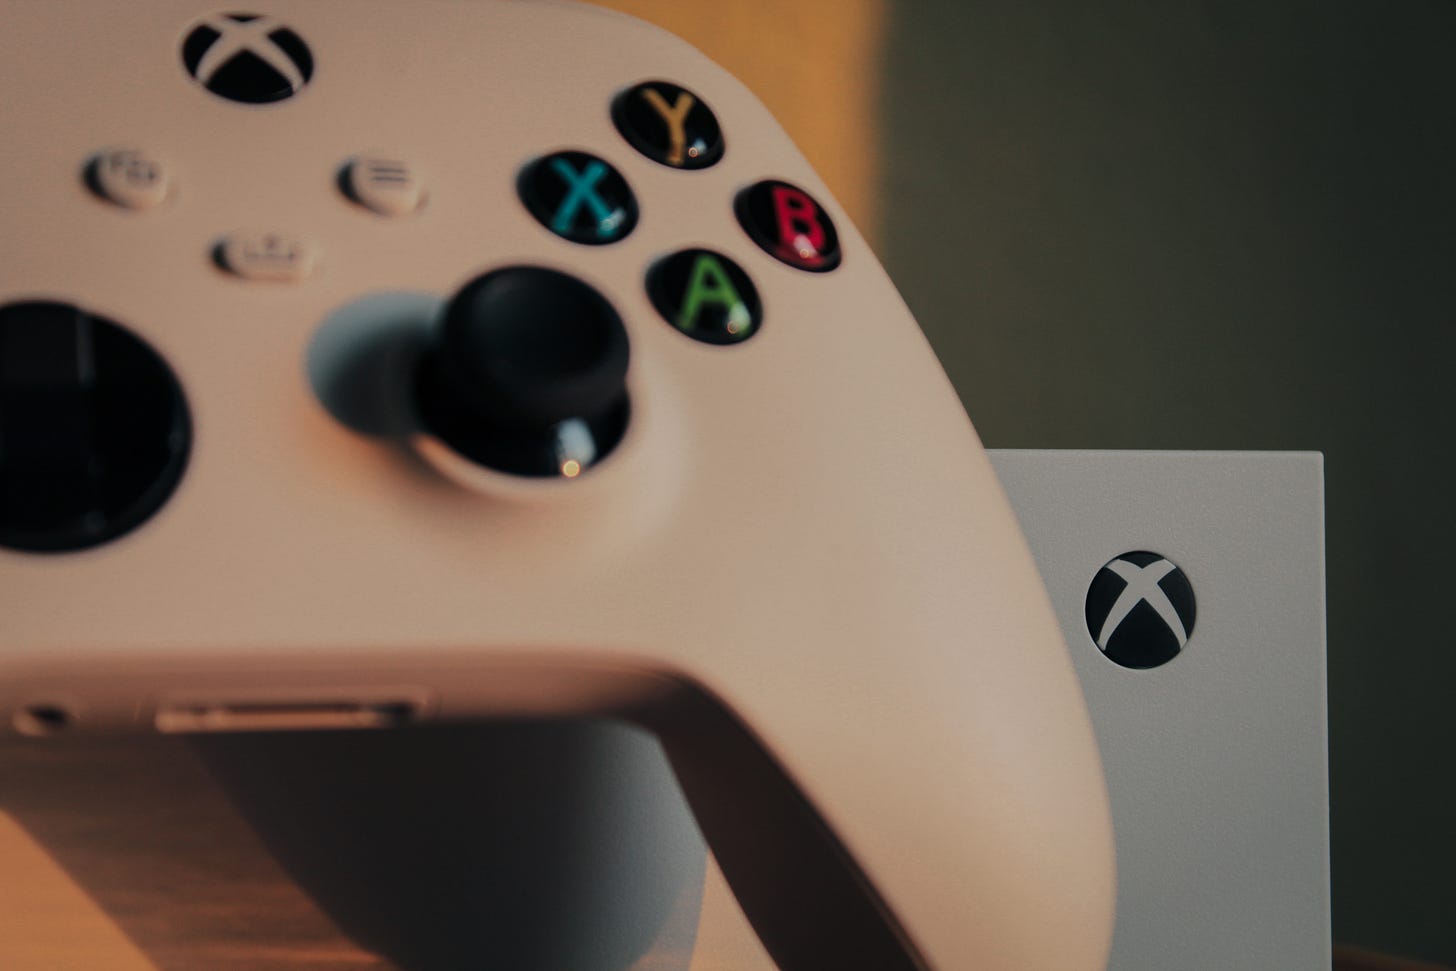 An Xbox controller close up.